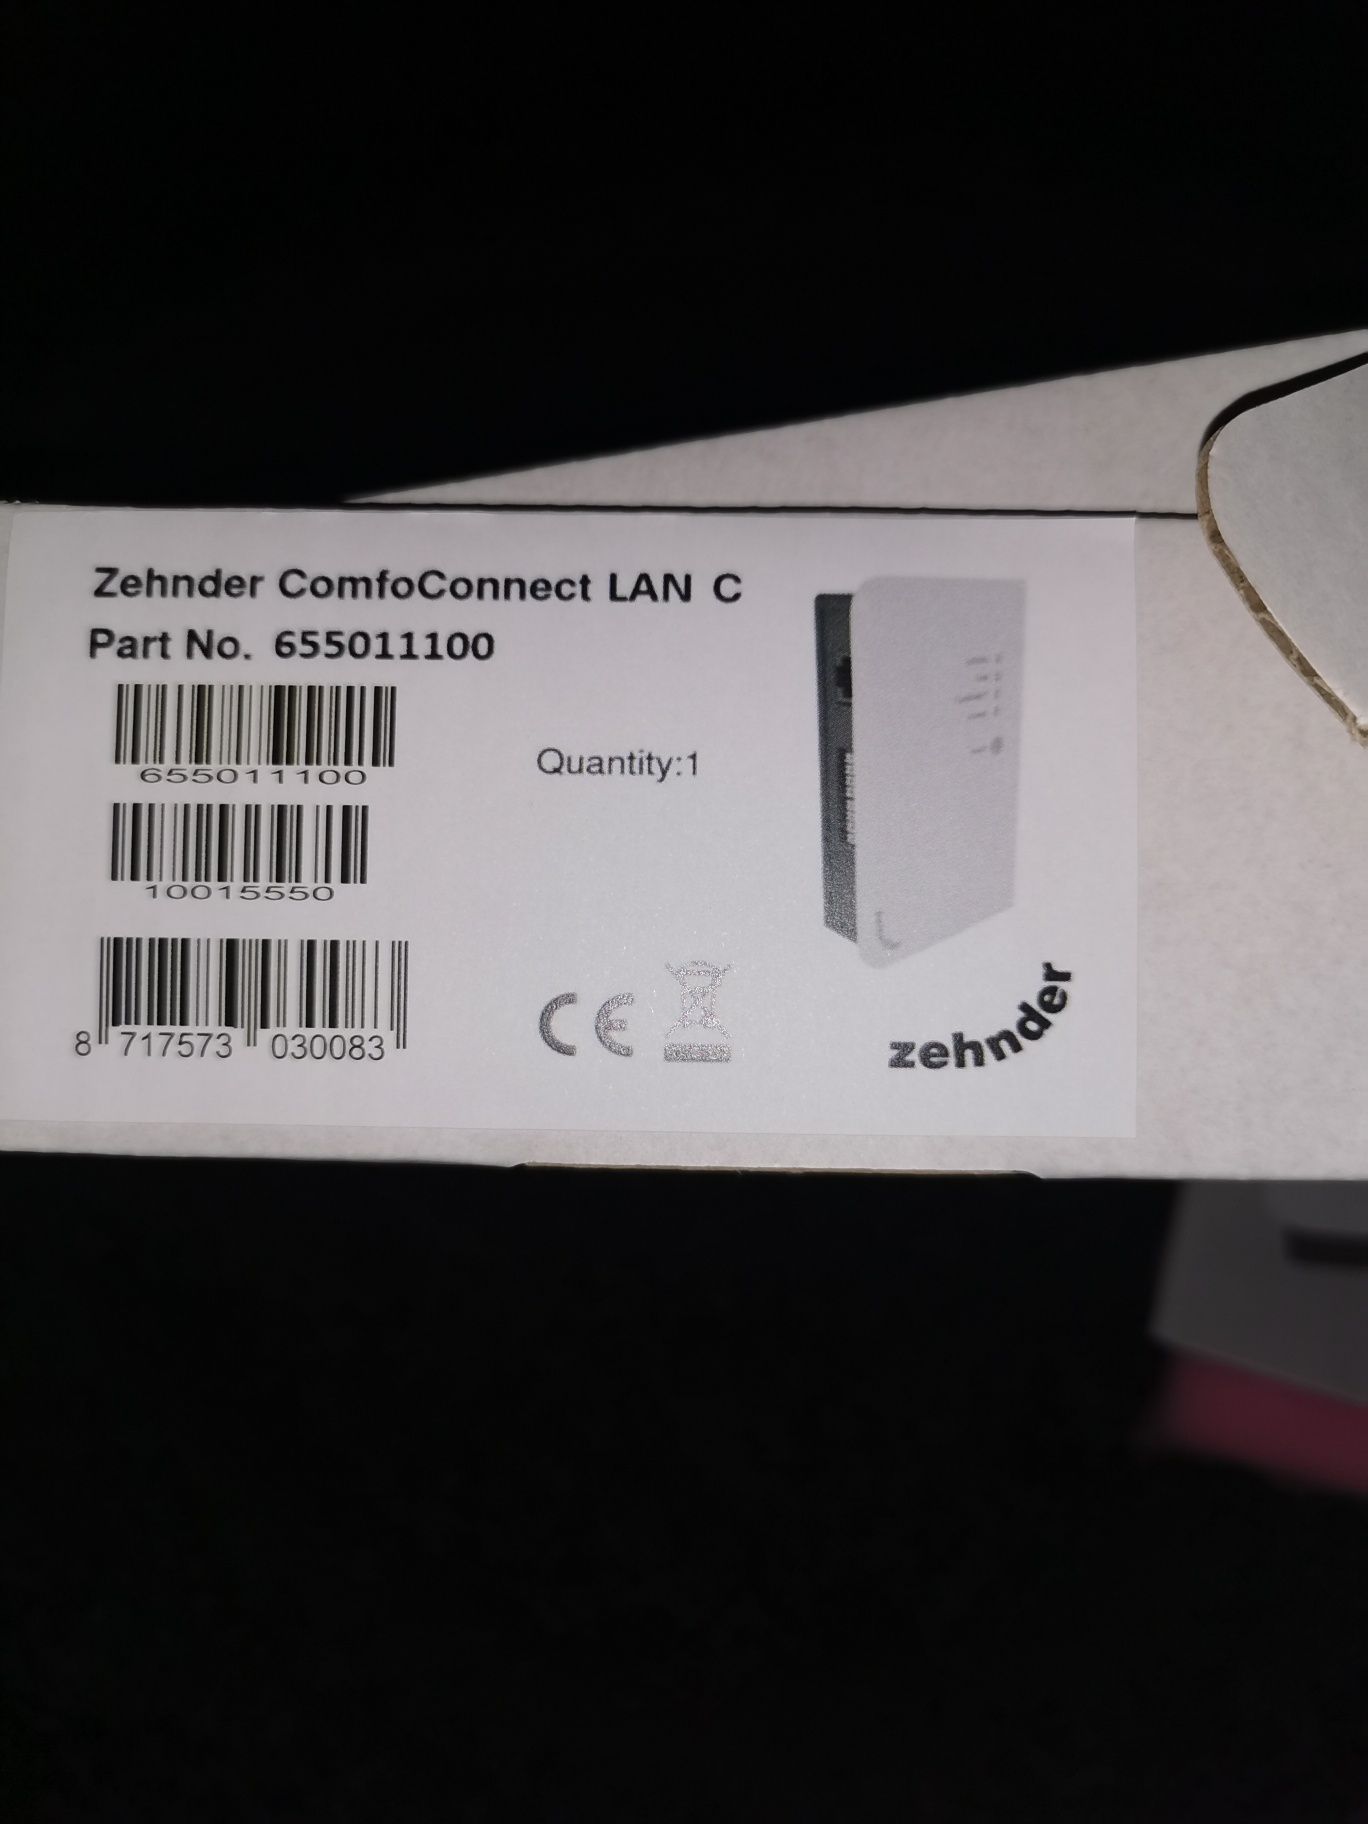 Zehnder comfoconnect LAN C